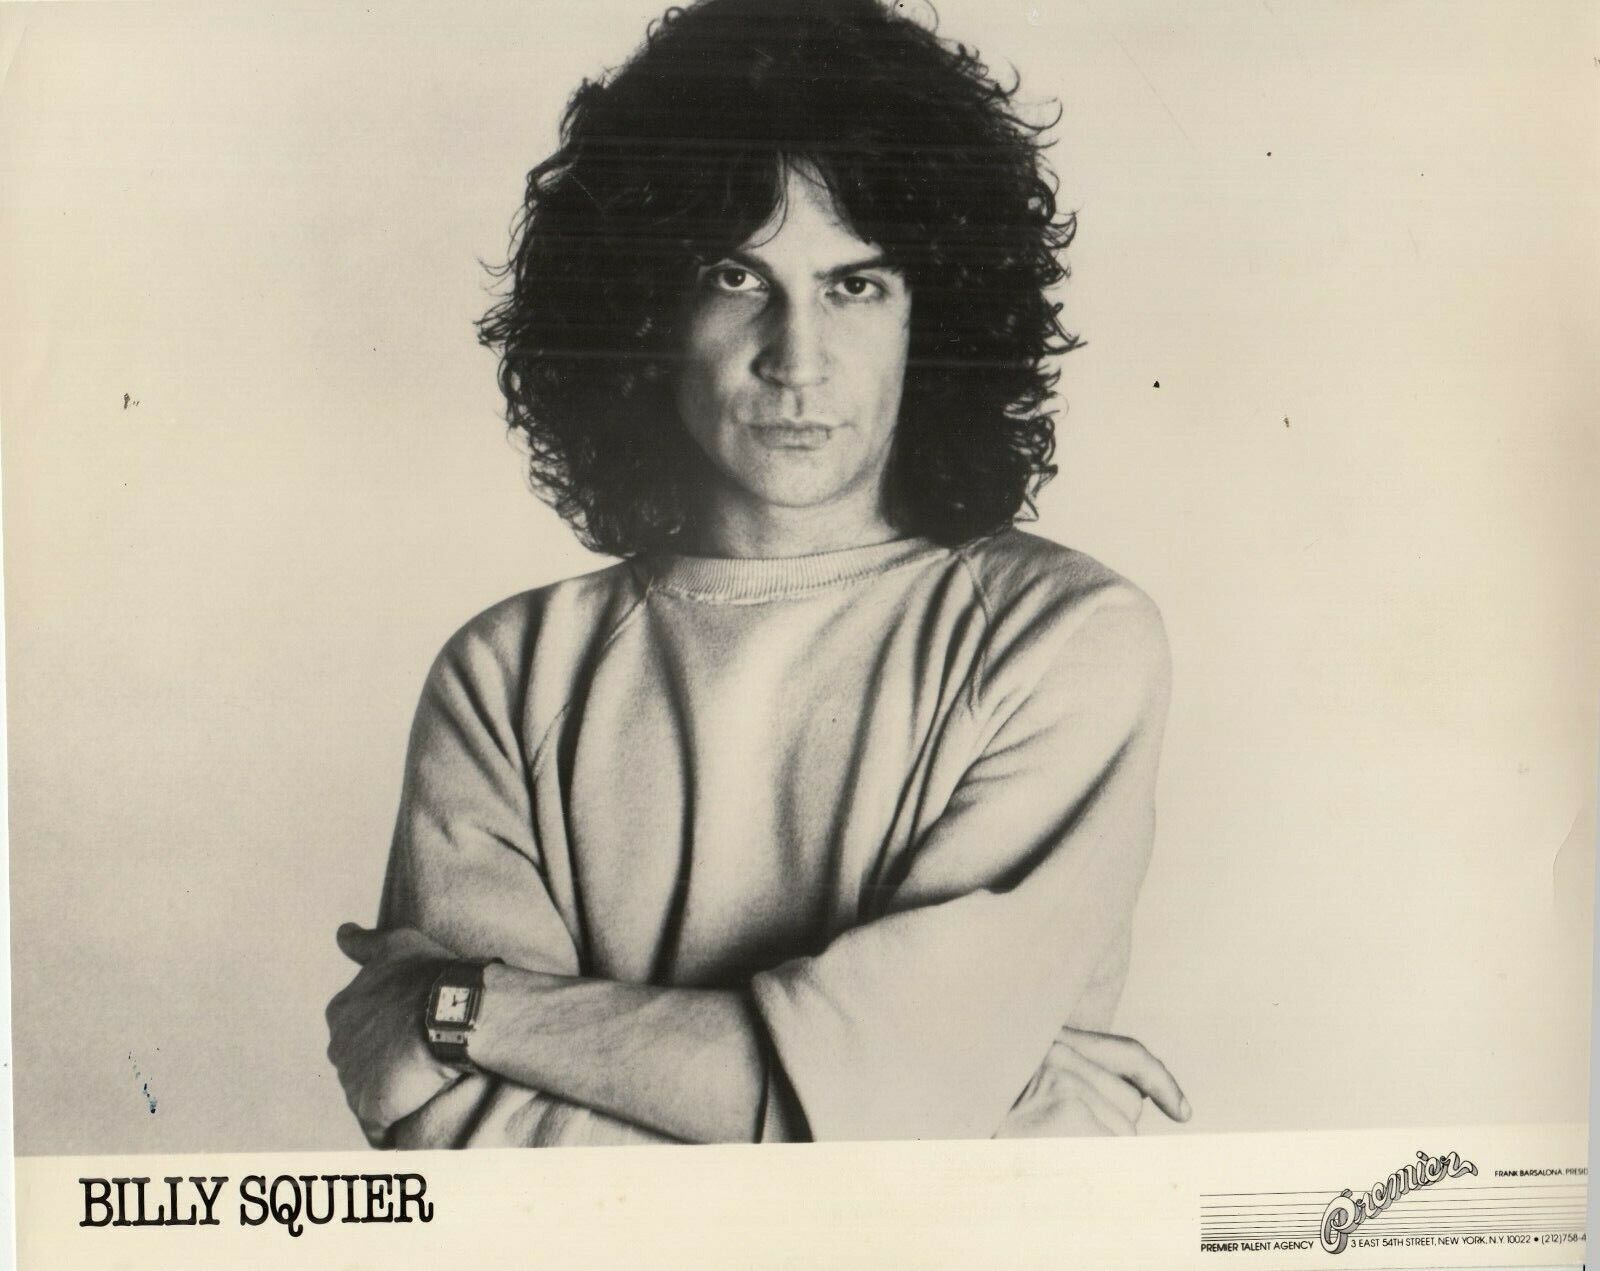 1982 Press Photo Rock entertainer, Billy Squier - 8x10 